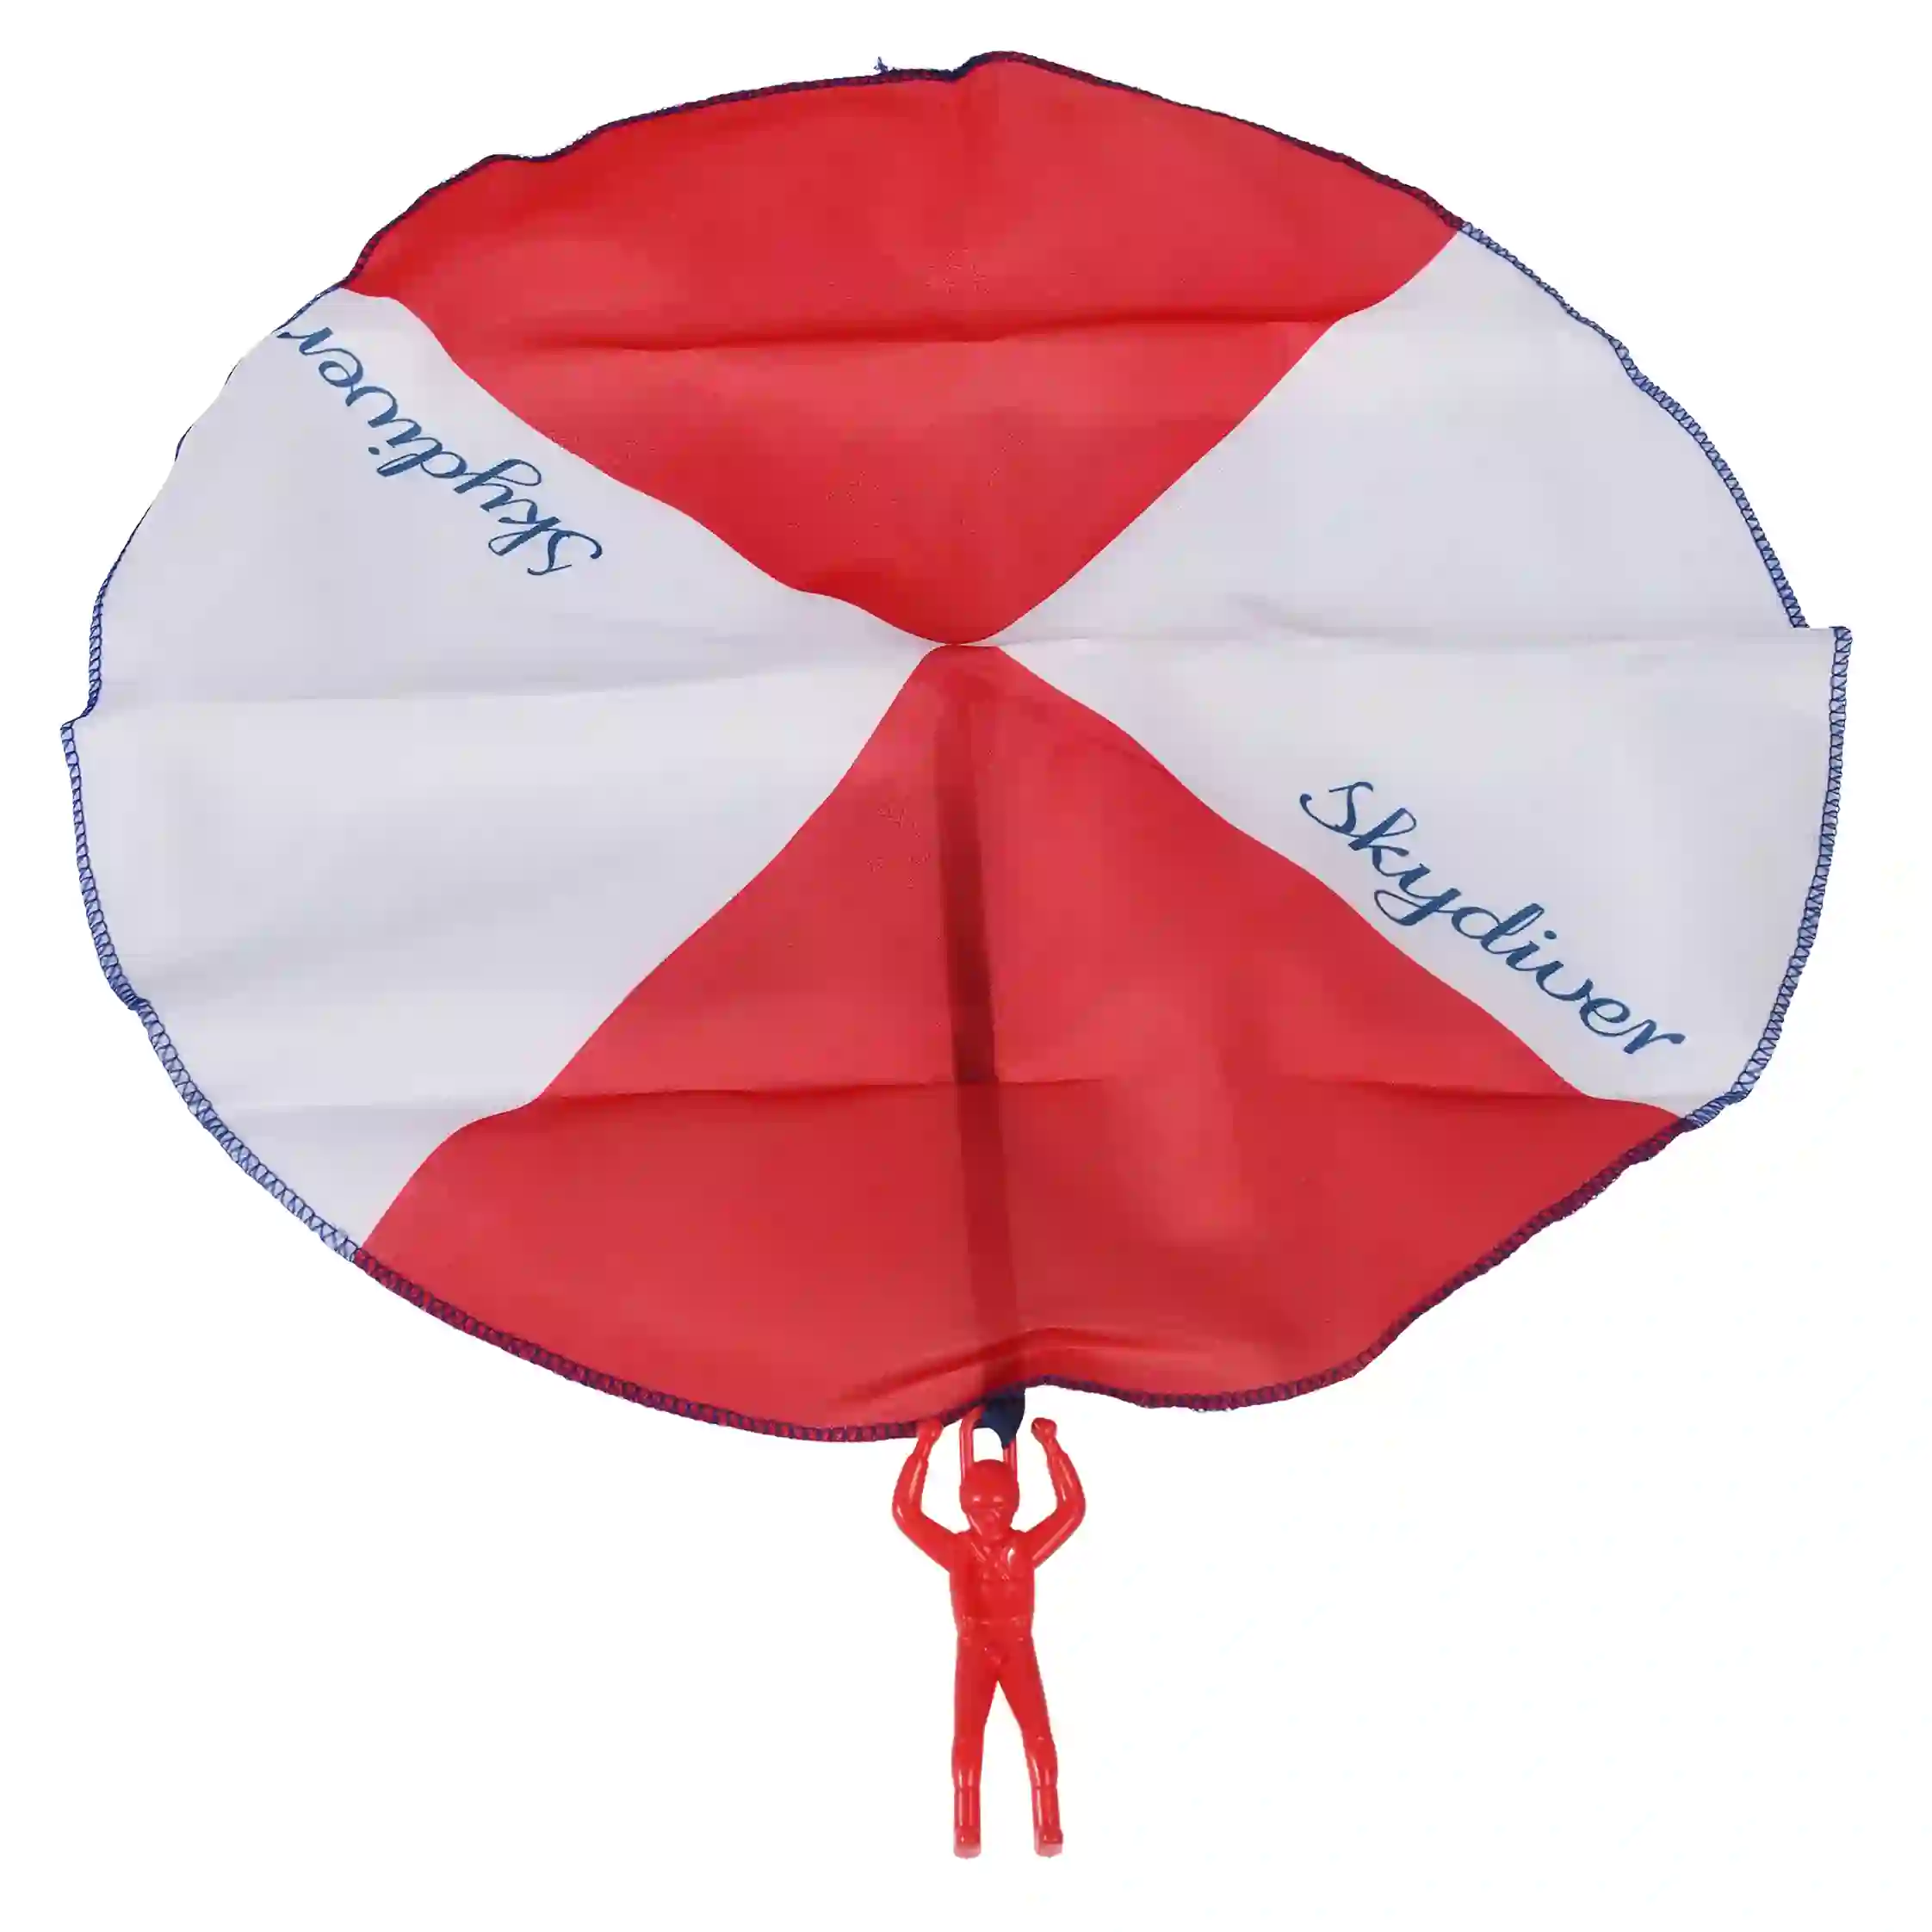 juguete tradicional de paracaidista